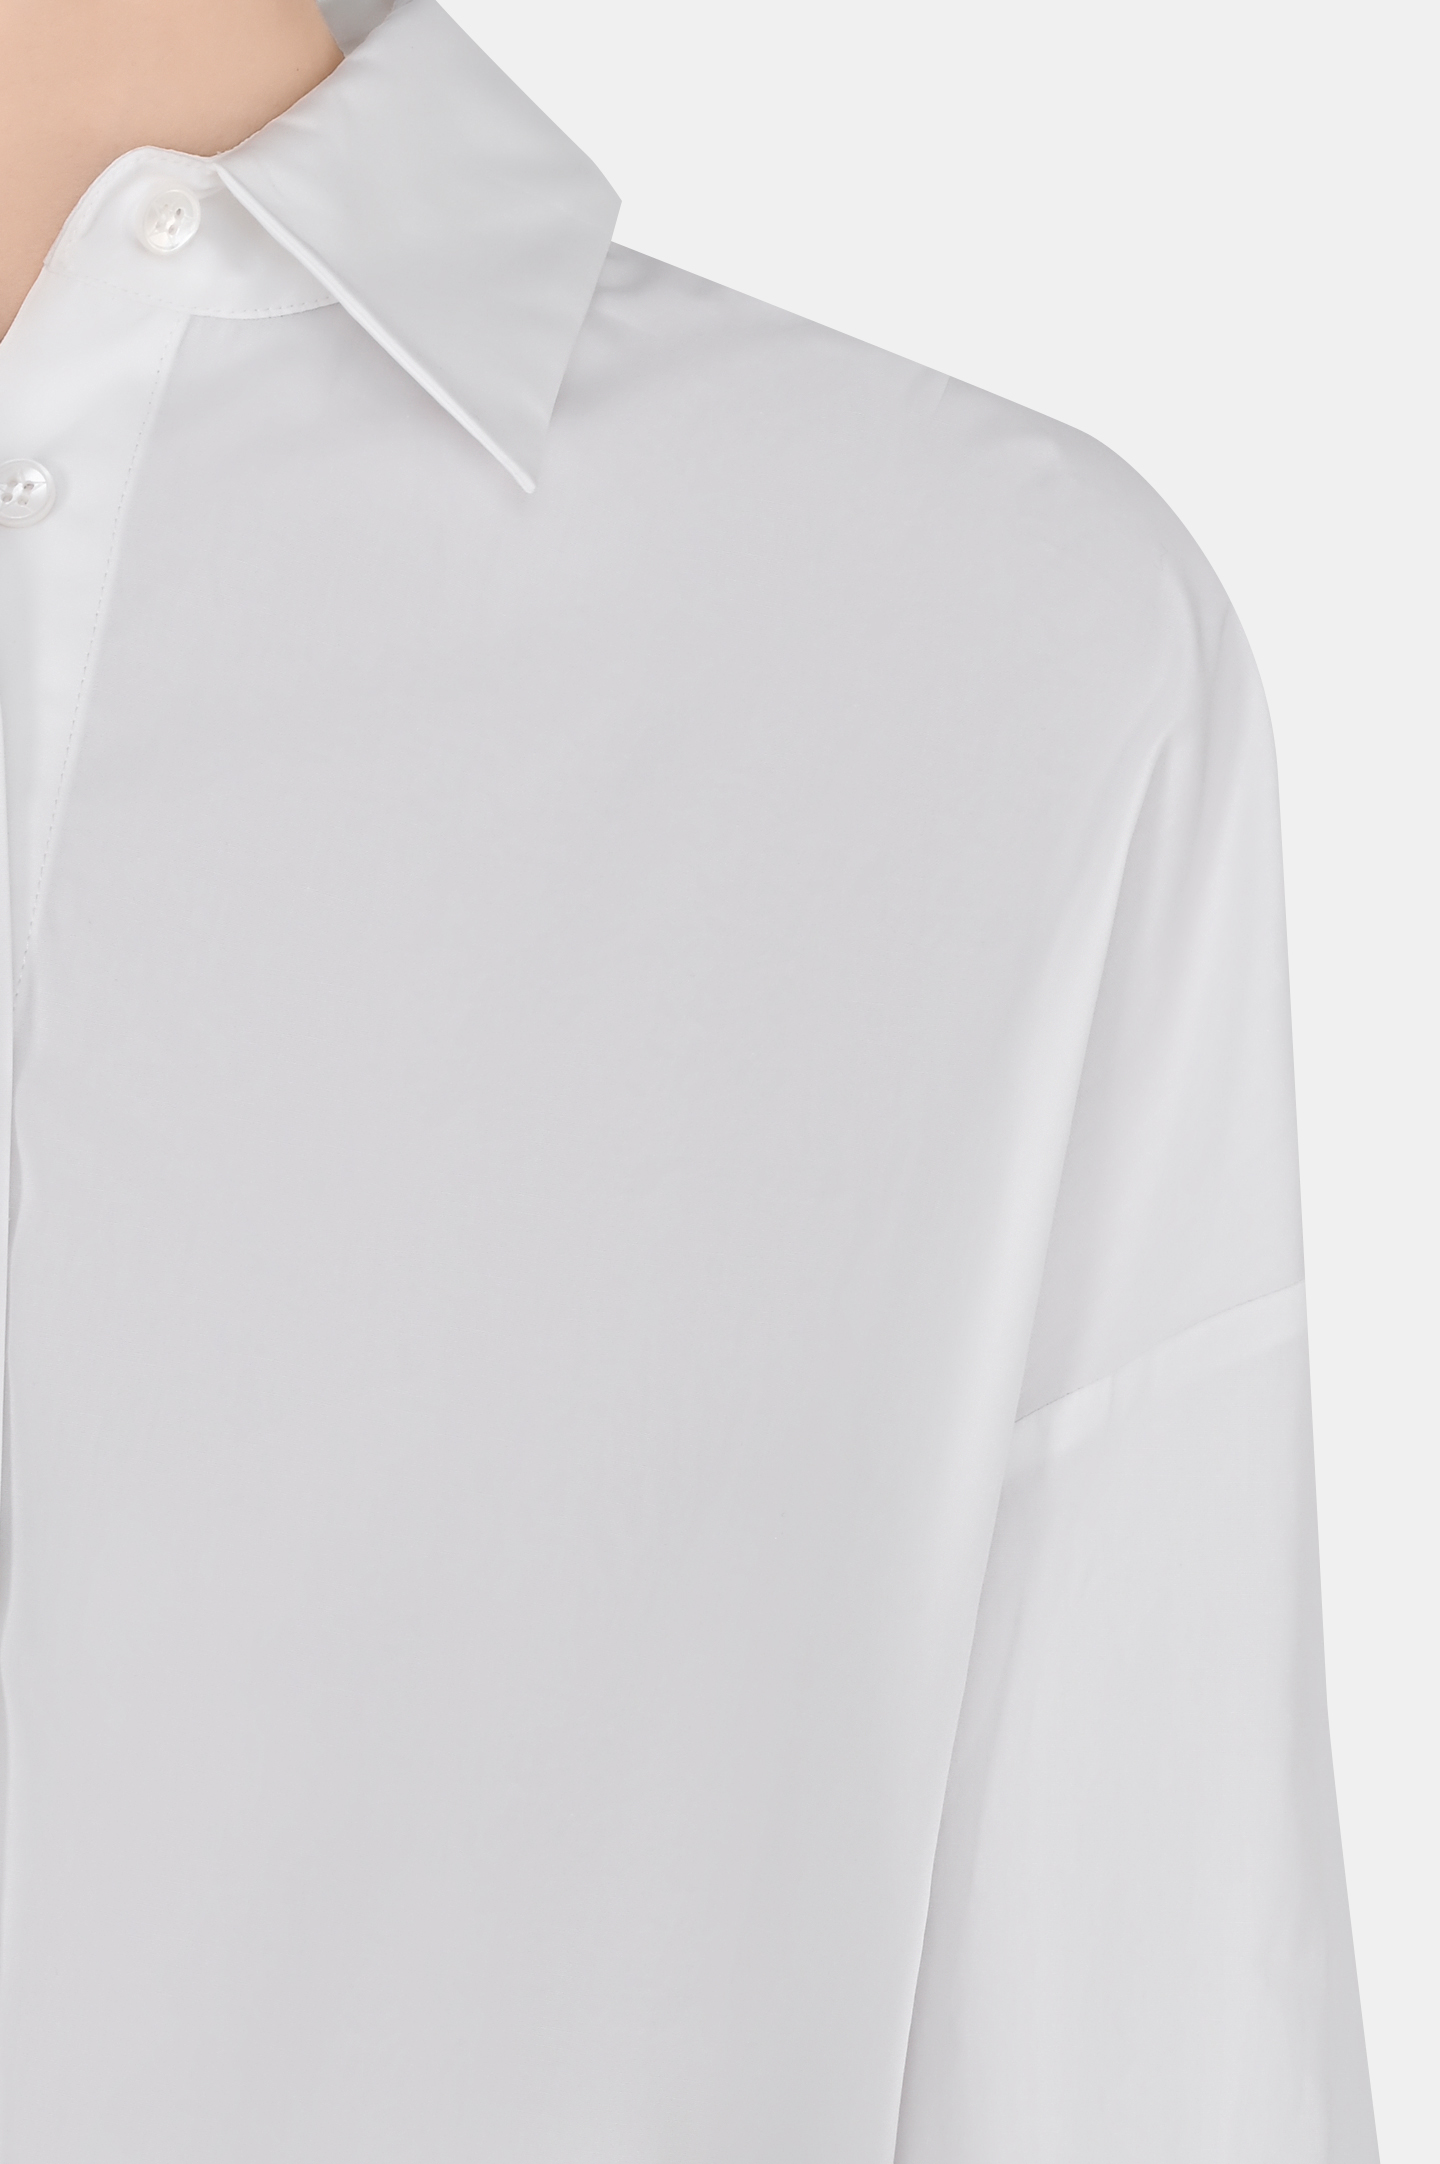 Рубашка LORENA ANTONIAZZI A2211CA01A, цвет: Белый, Женский